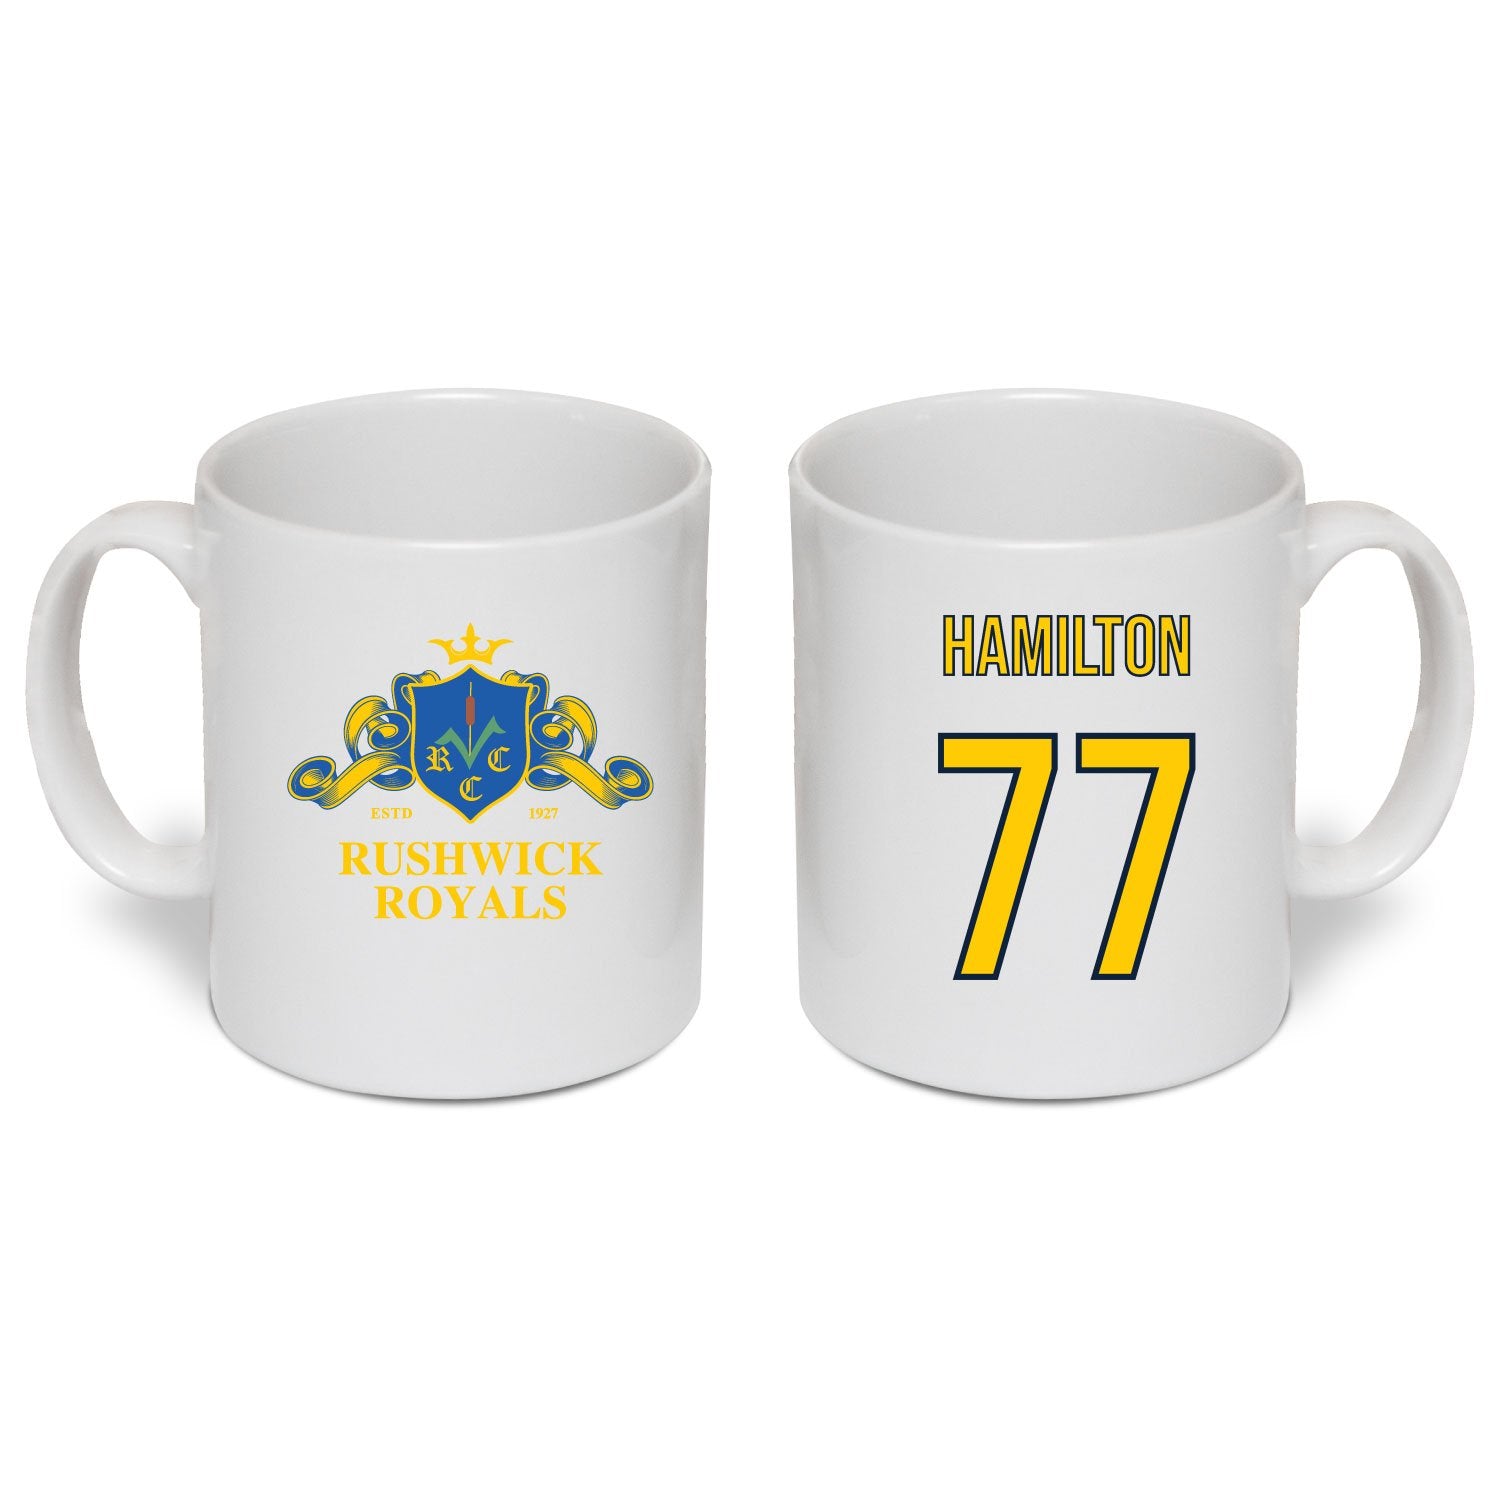 rushwick royals mug